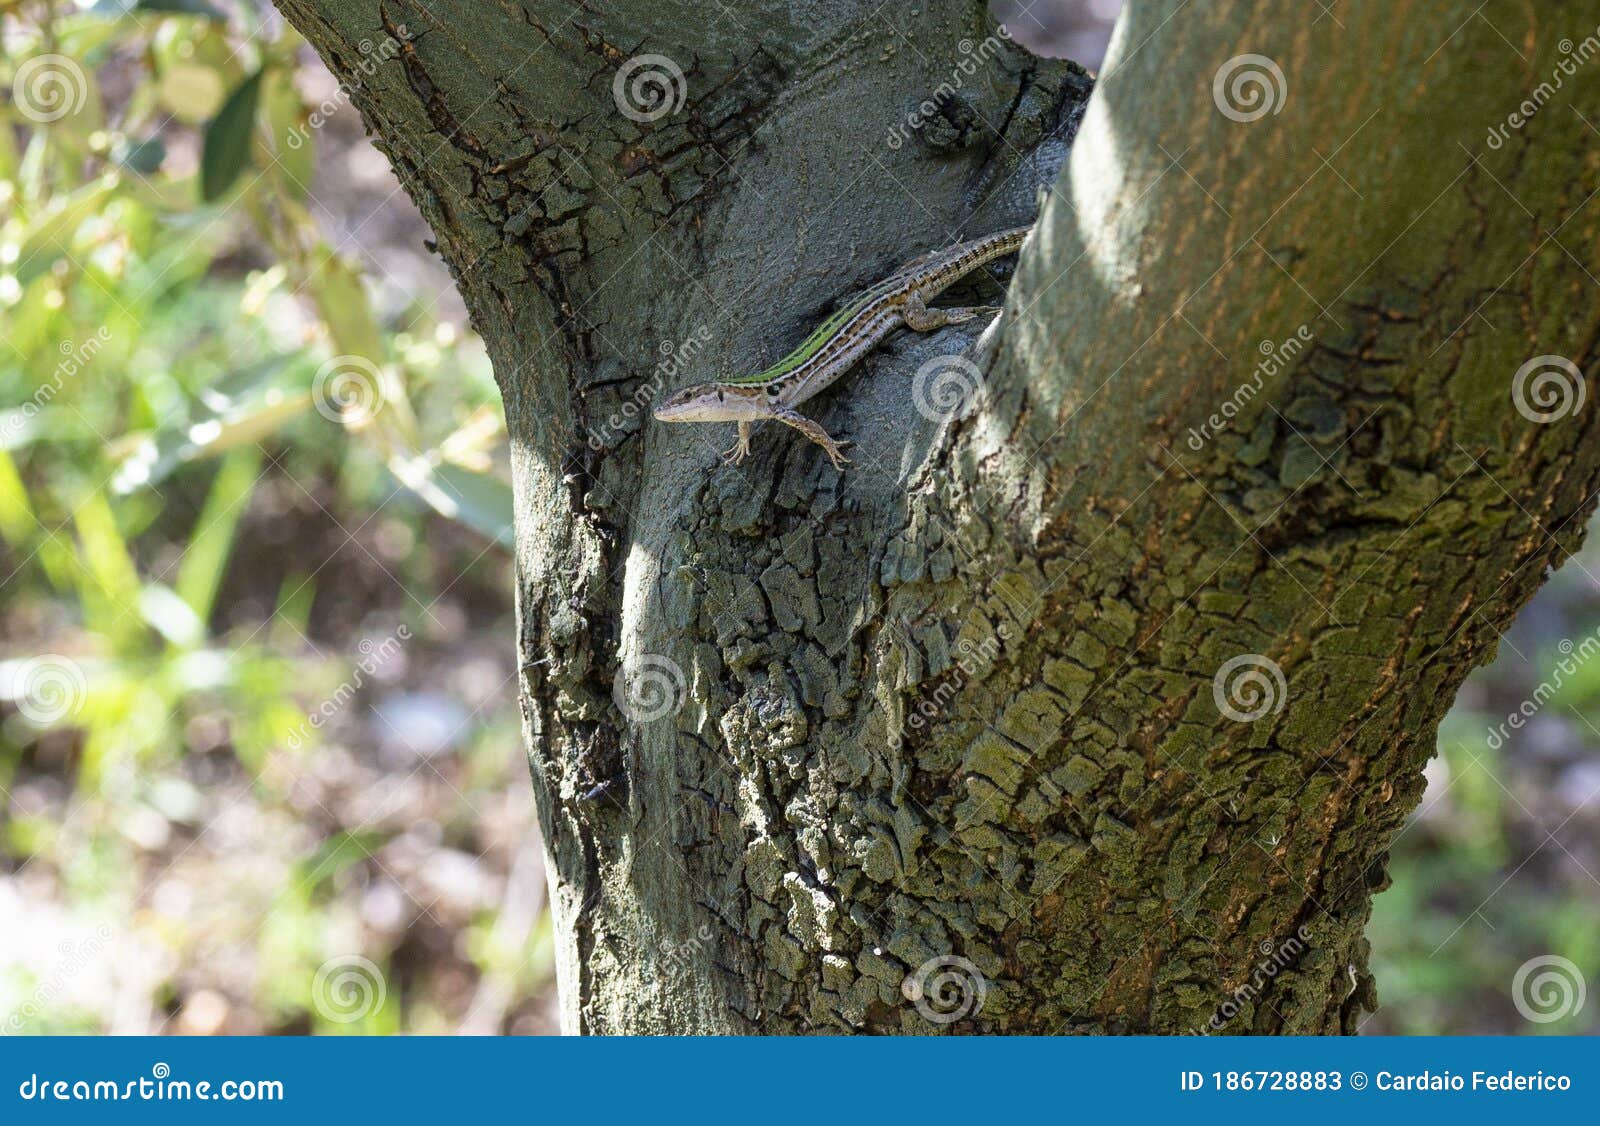 lizard on olive tree in summer